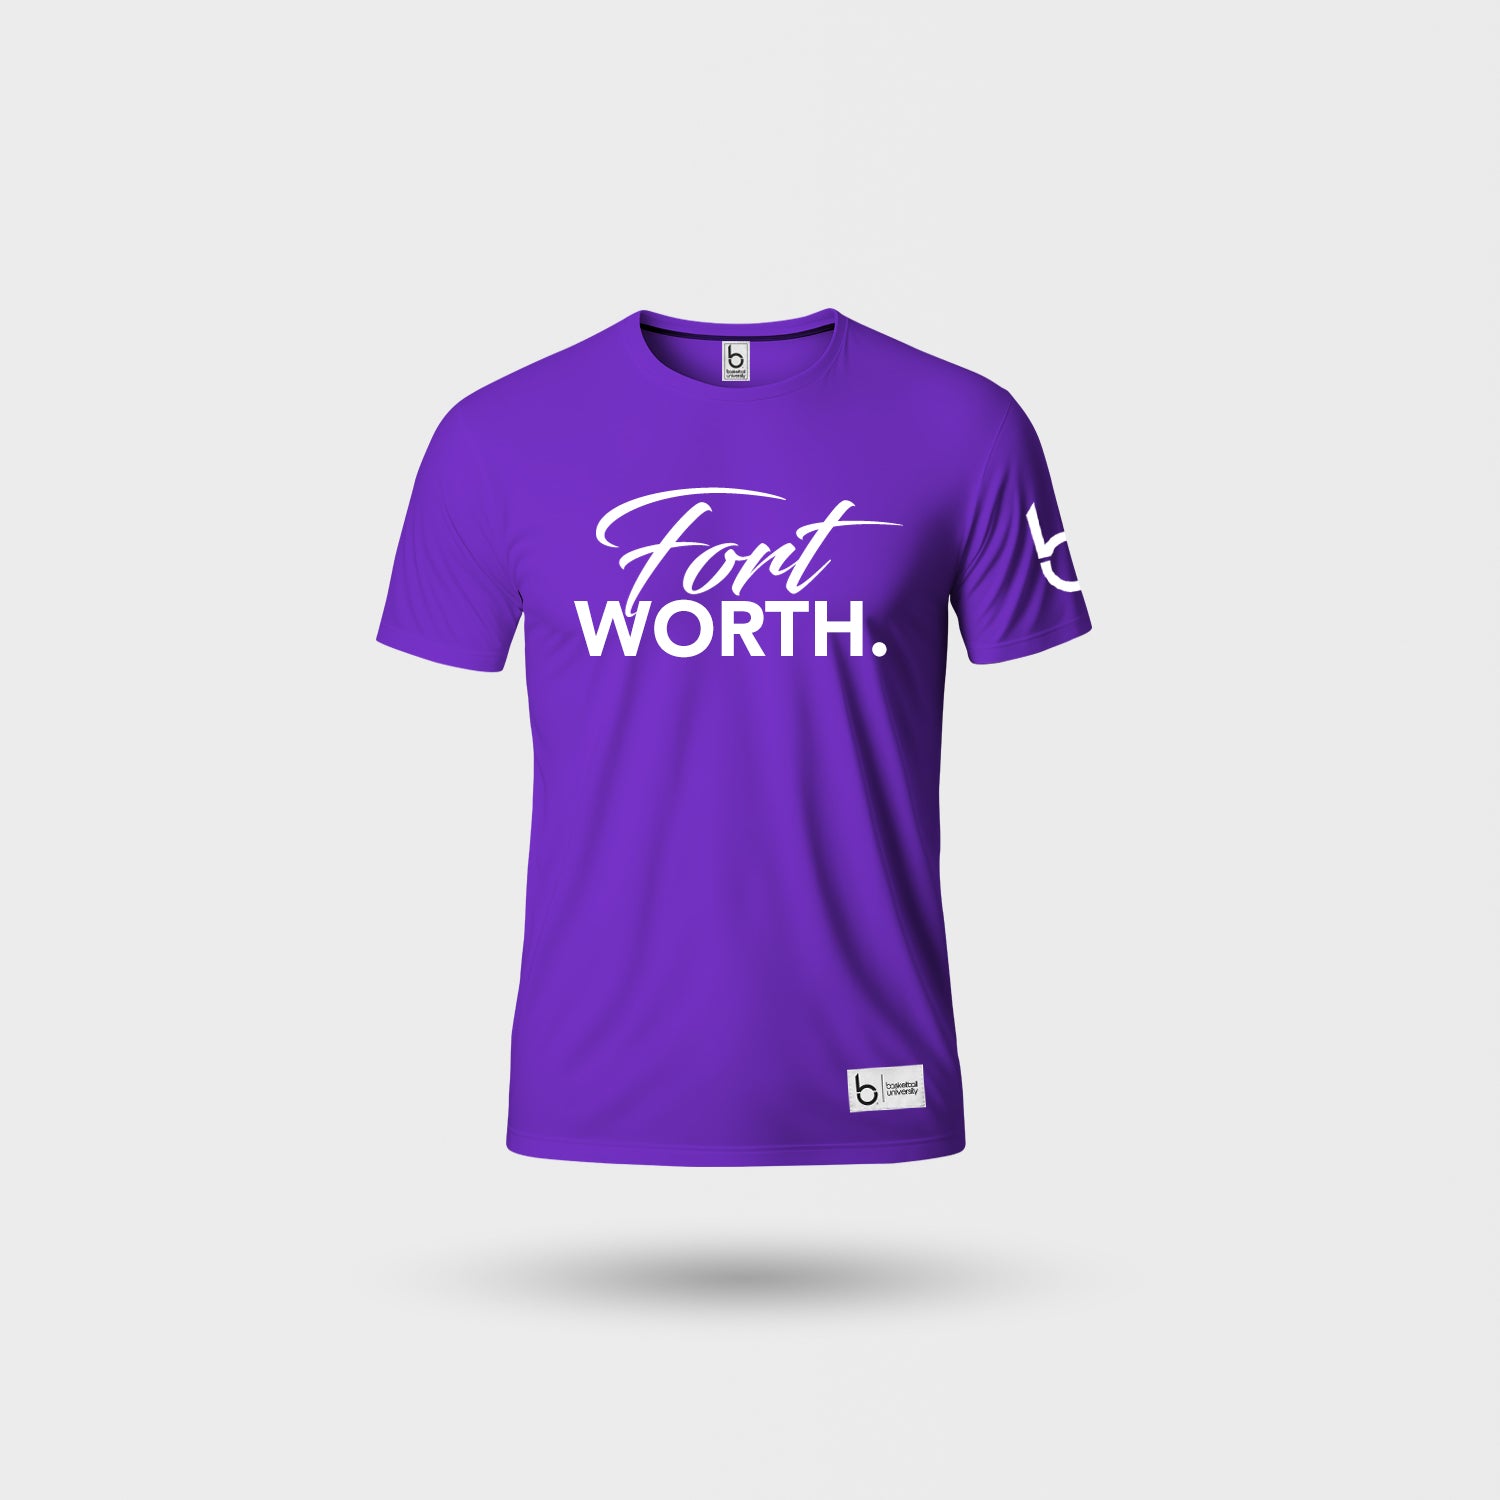 Fort Worth - Hoop City T-Shirt